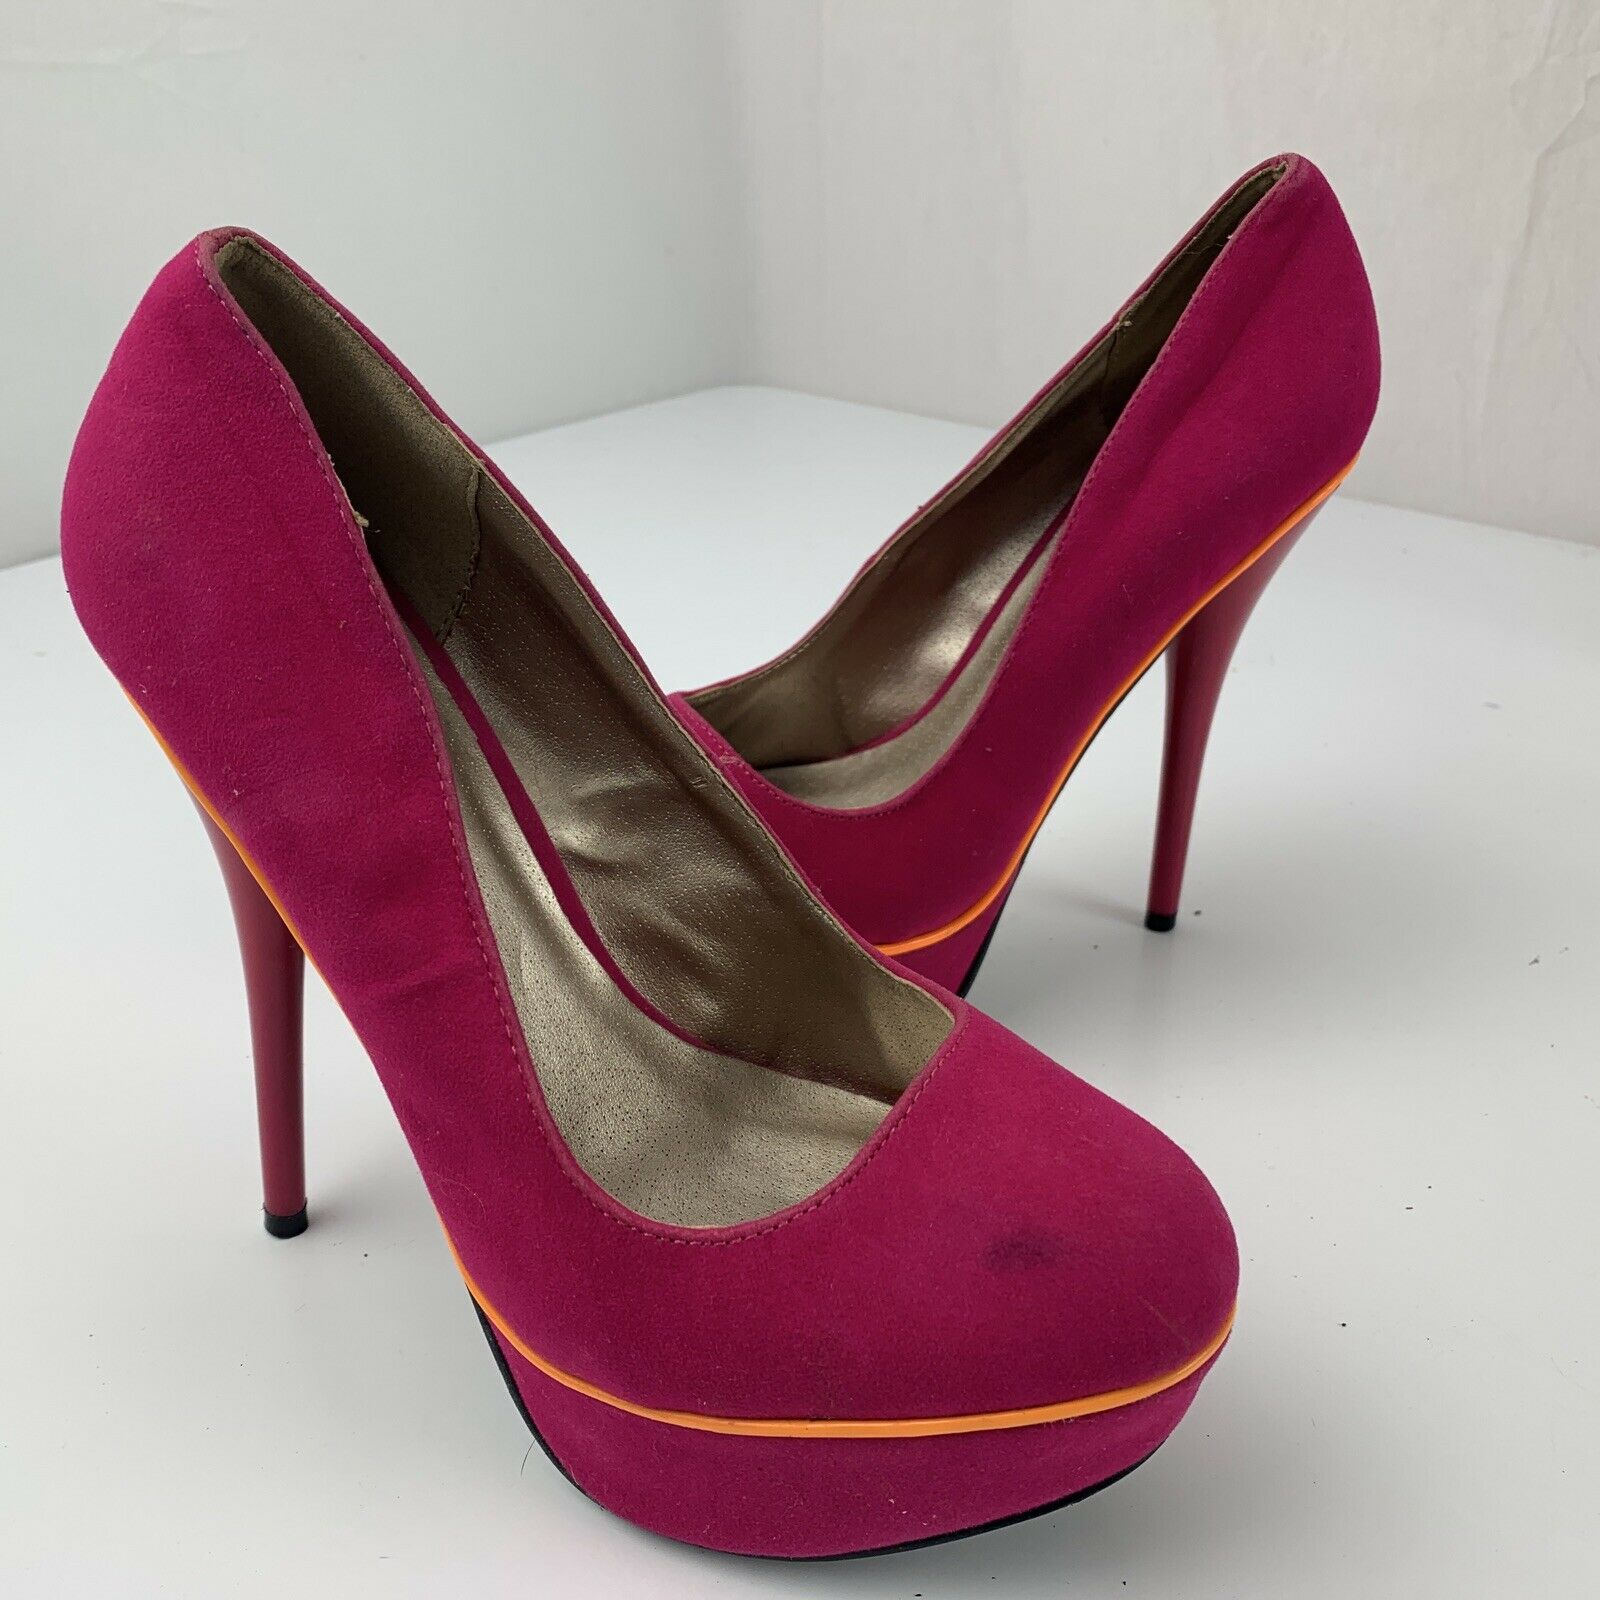 Qupid Bright Pink Orange High Heels Size 7.5 Women's Shoes